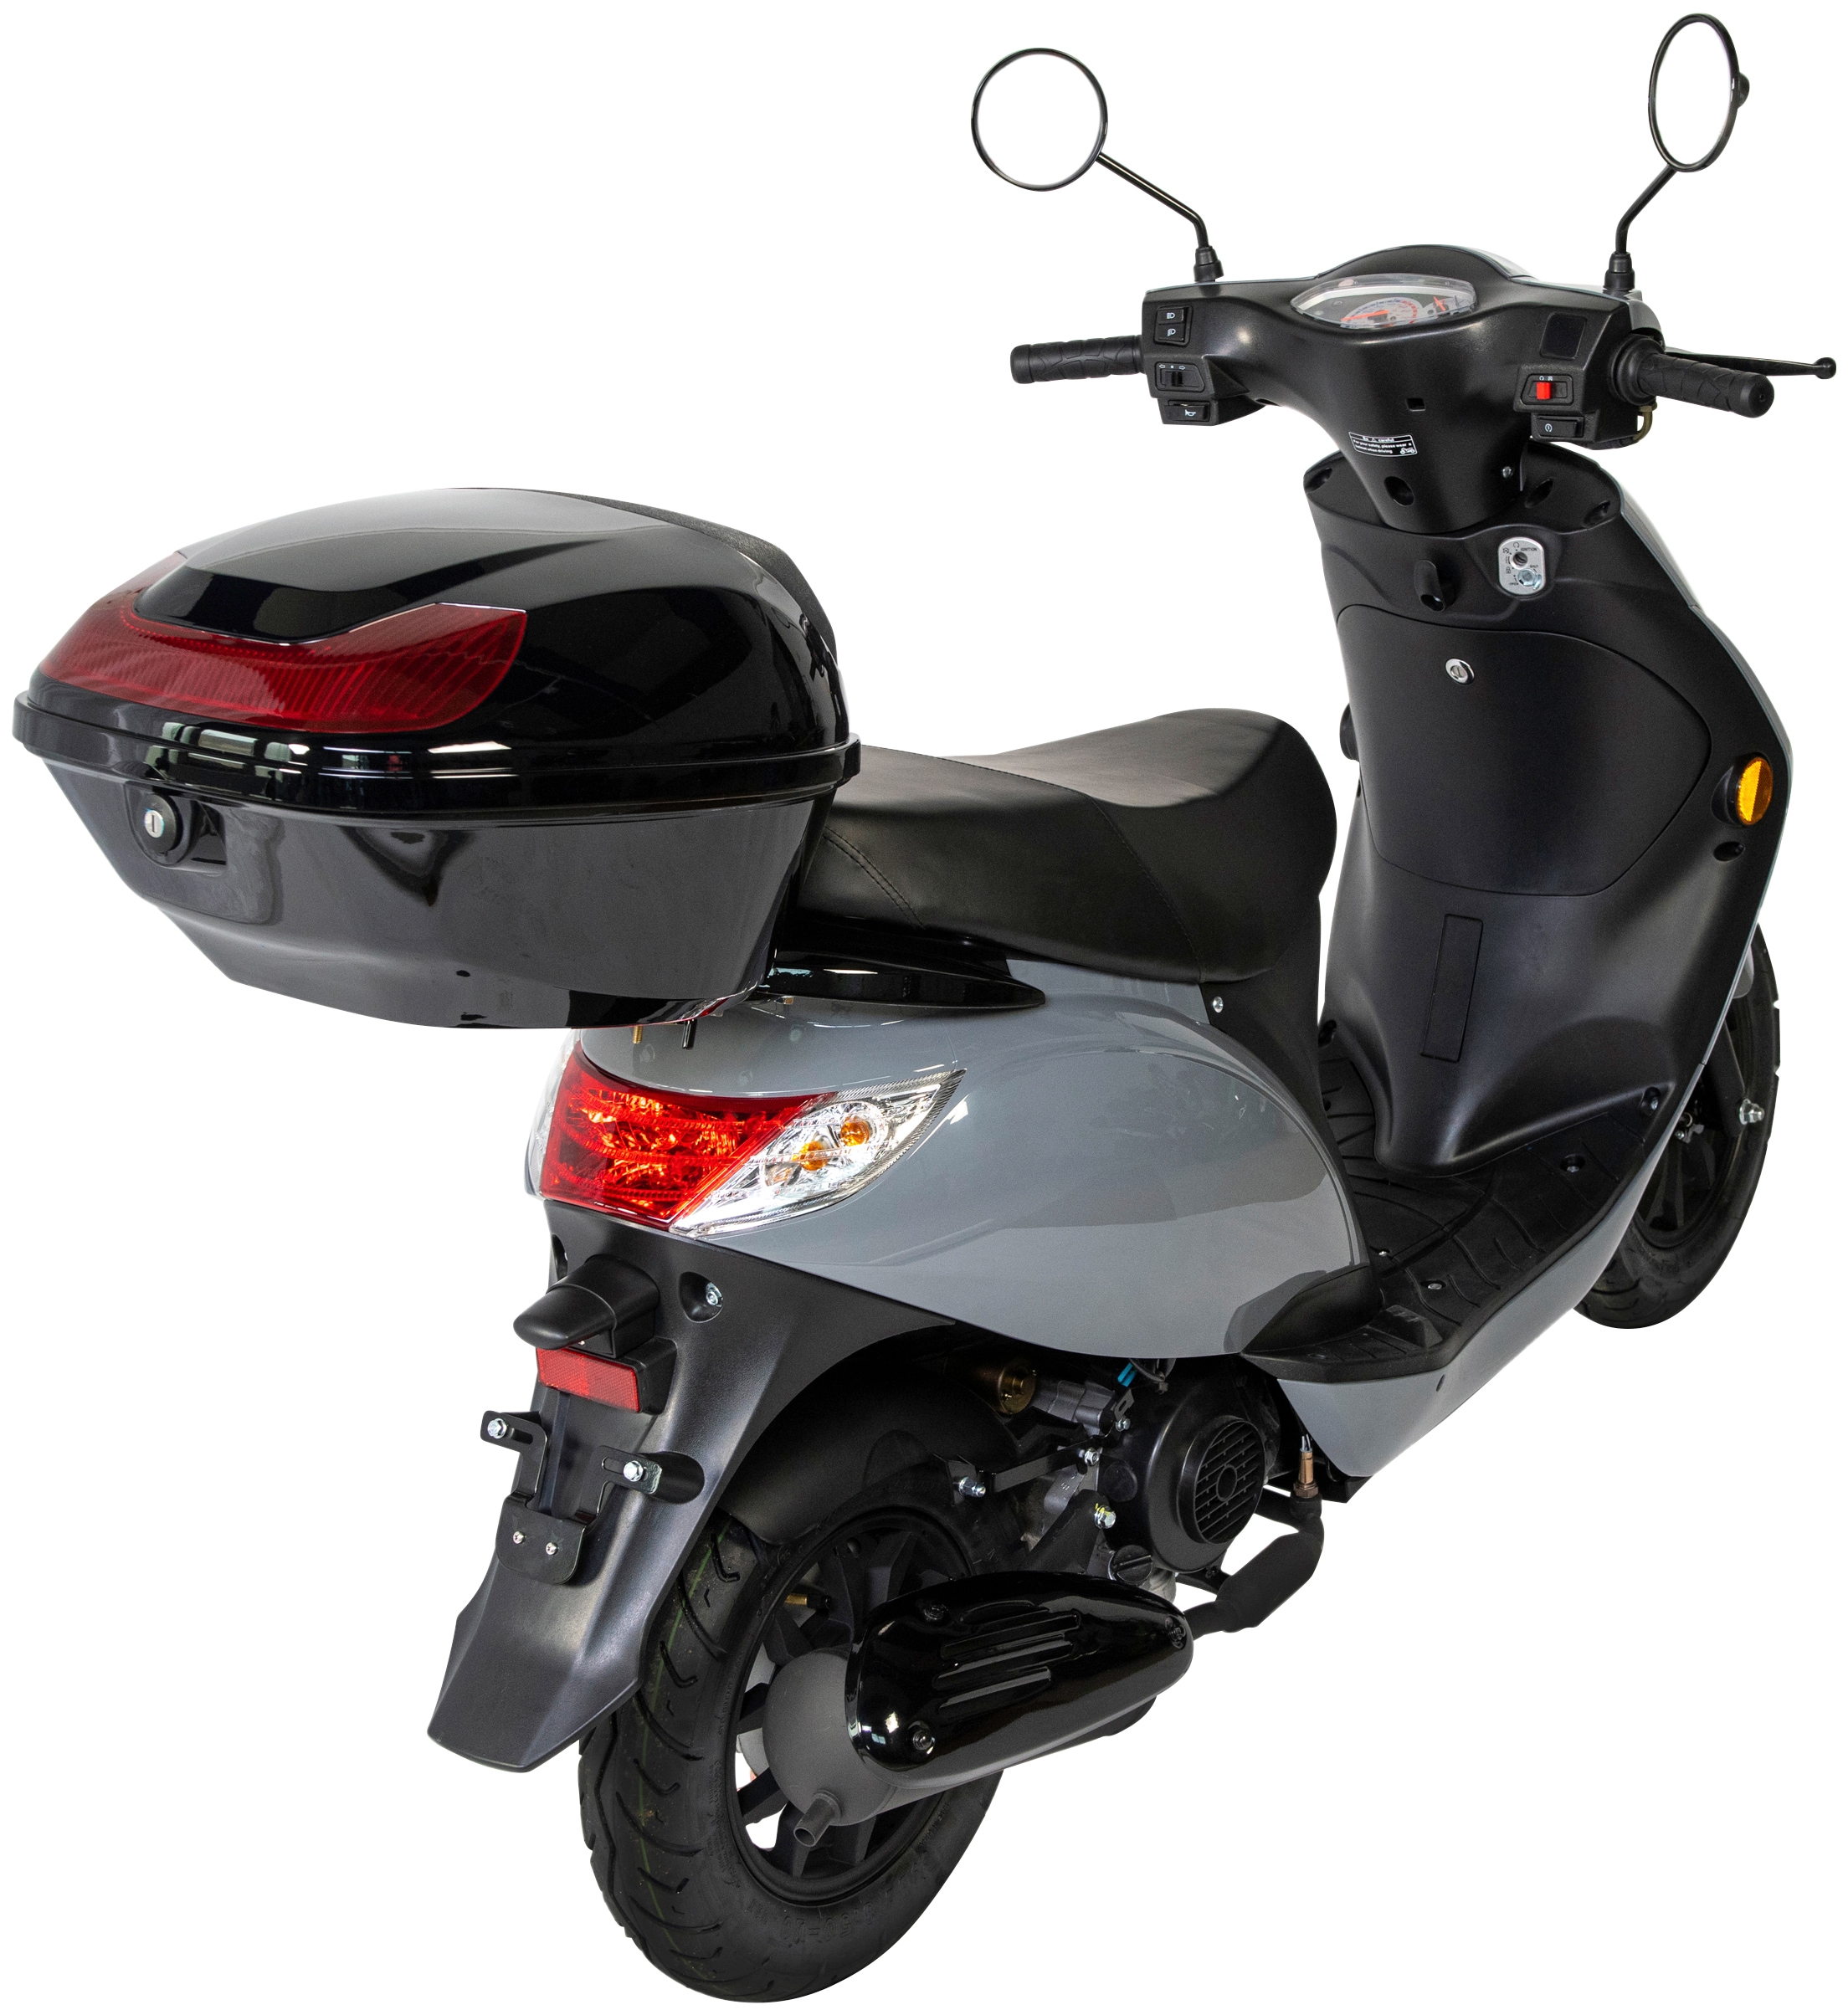 GT UNION Motorroller »Matteo 50-45«, 3 Topcase mit tlg., cm³, 2 PS, 45 km/h, online kaufen (Komplett-Set, inkl. Topcase), 50 5, Euro